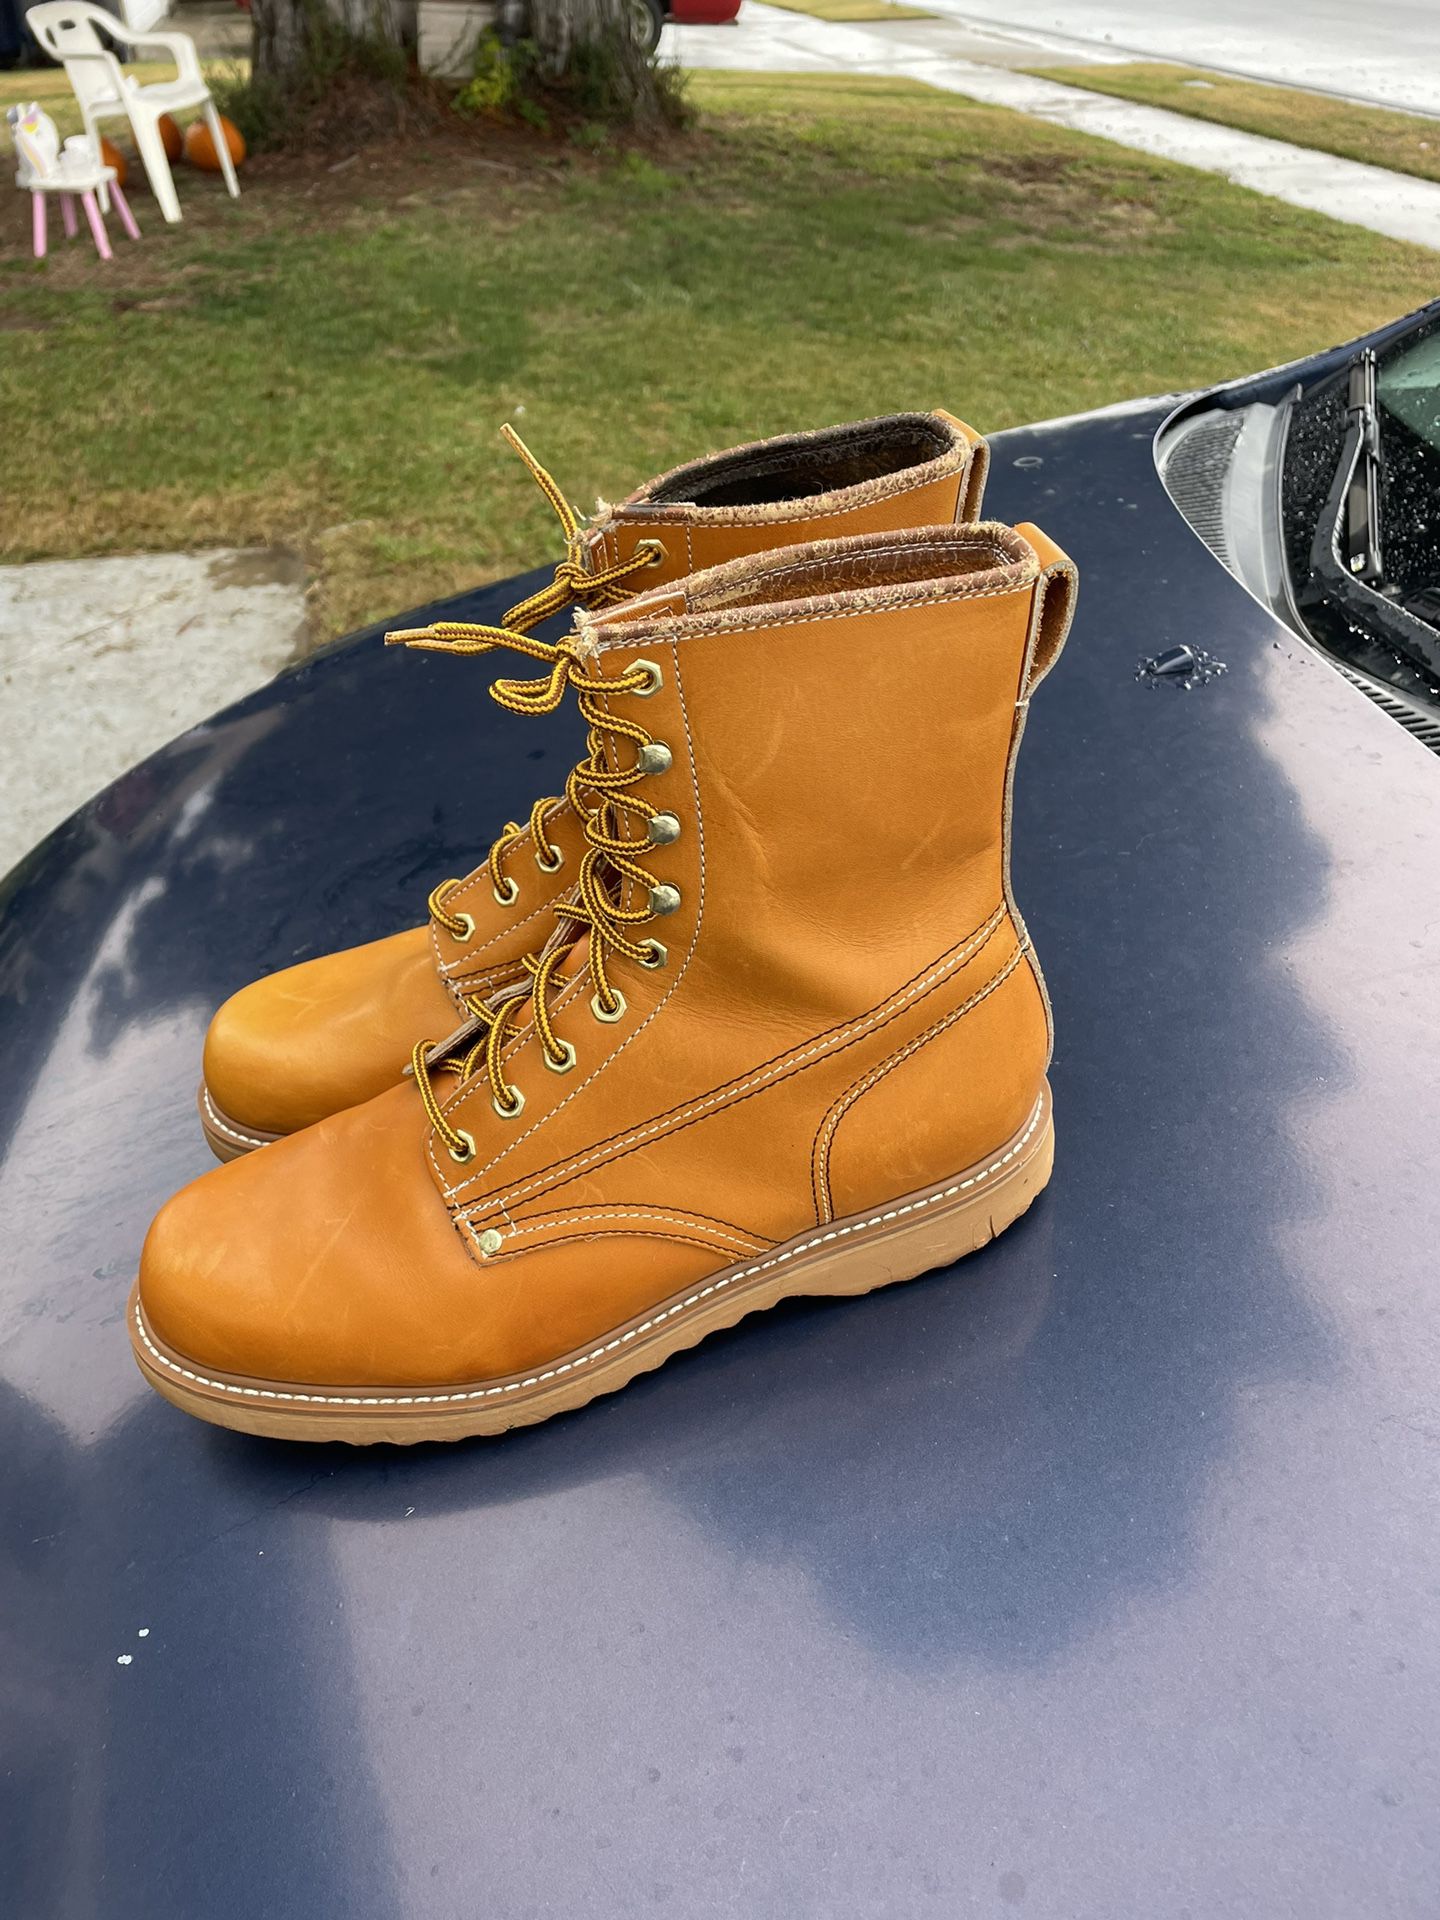 Work Boots, Size 13 For Men RangesRuffnides